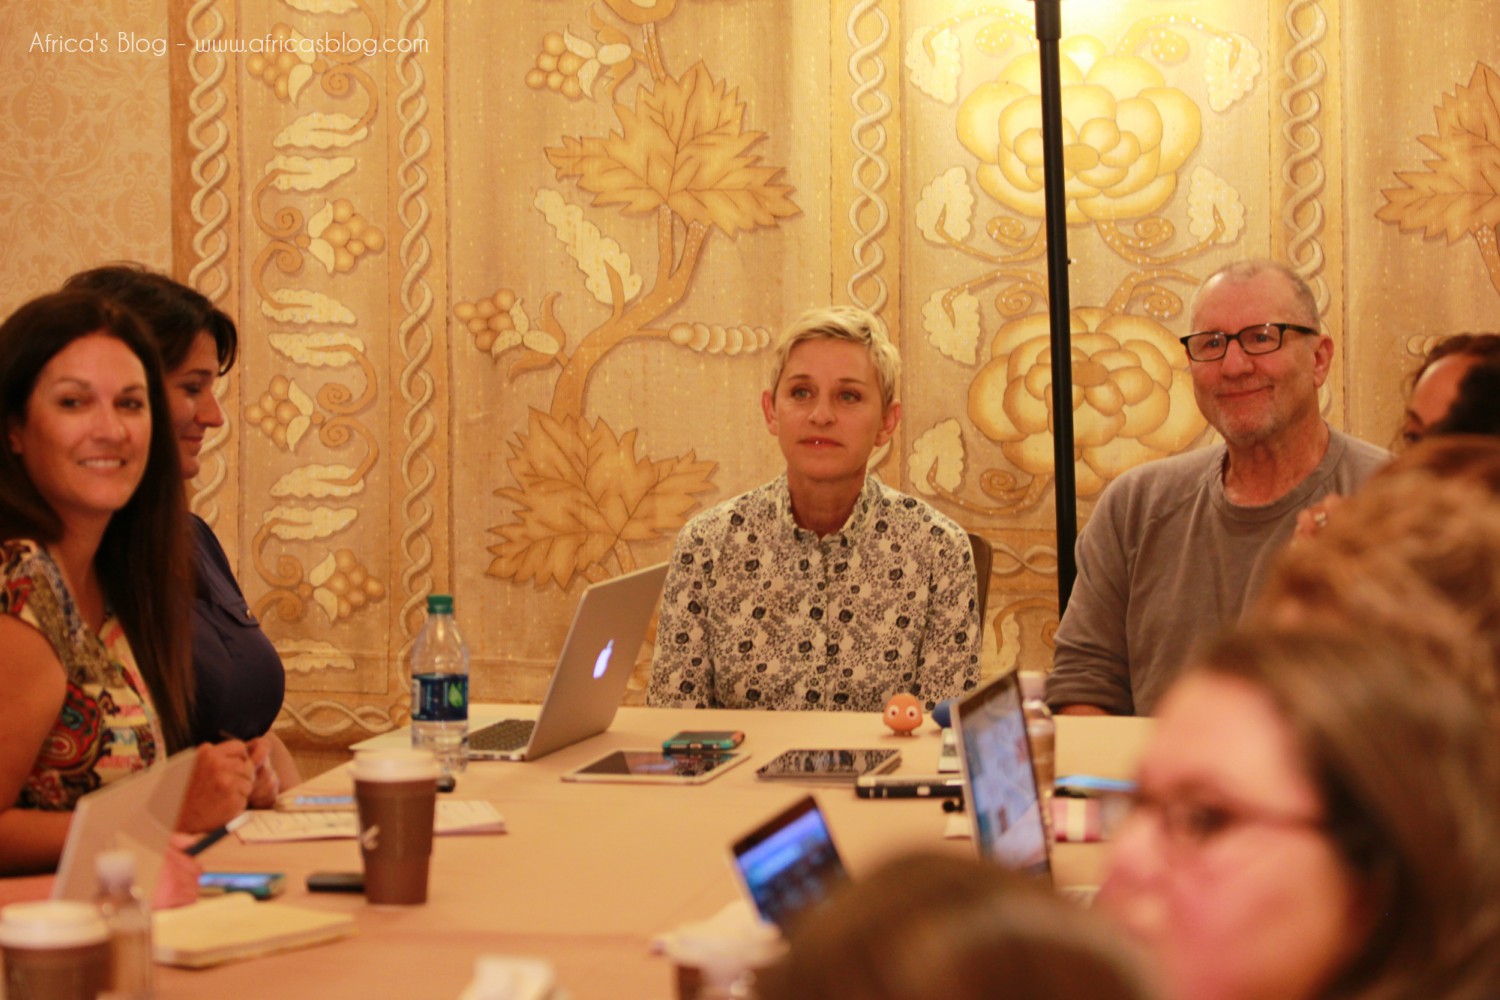 Ellen DeGeneres & Ed O'Neill's take on Finding Dory #FindingDoryEvent